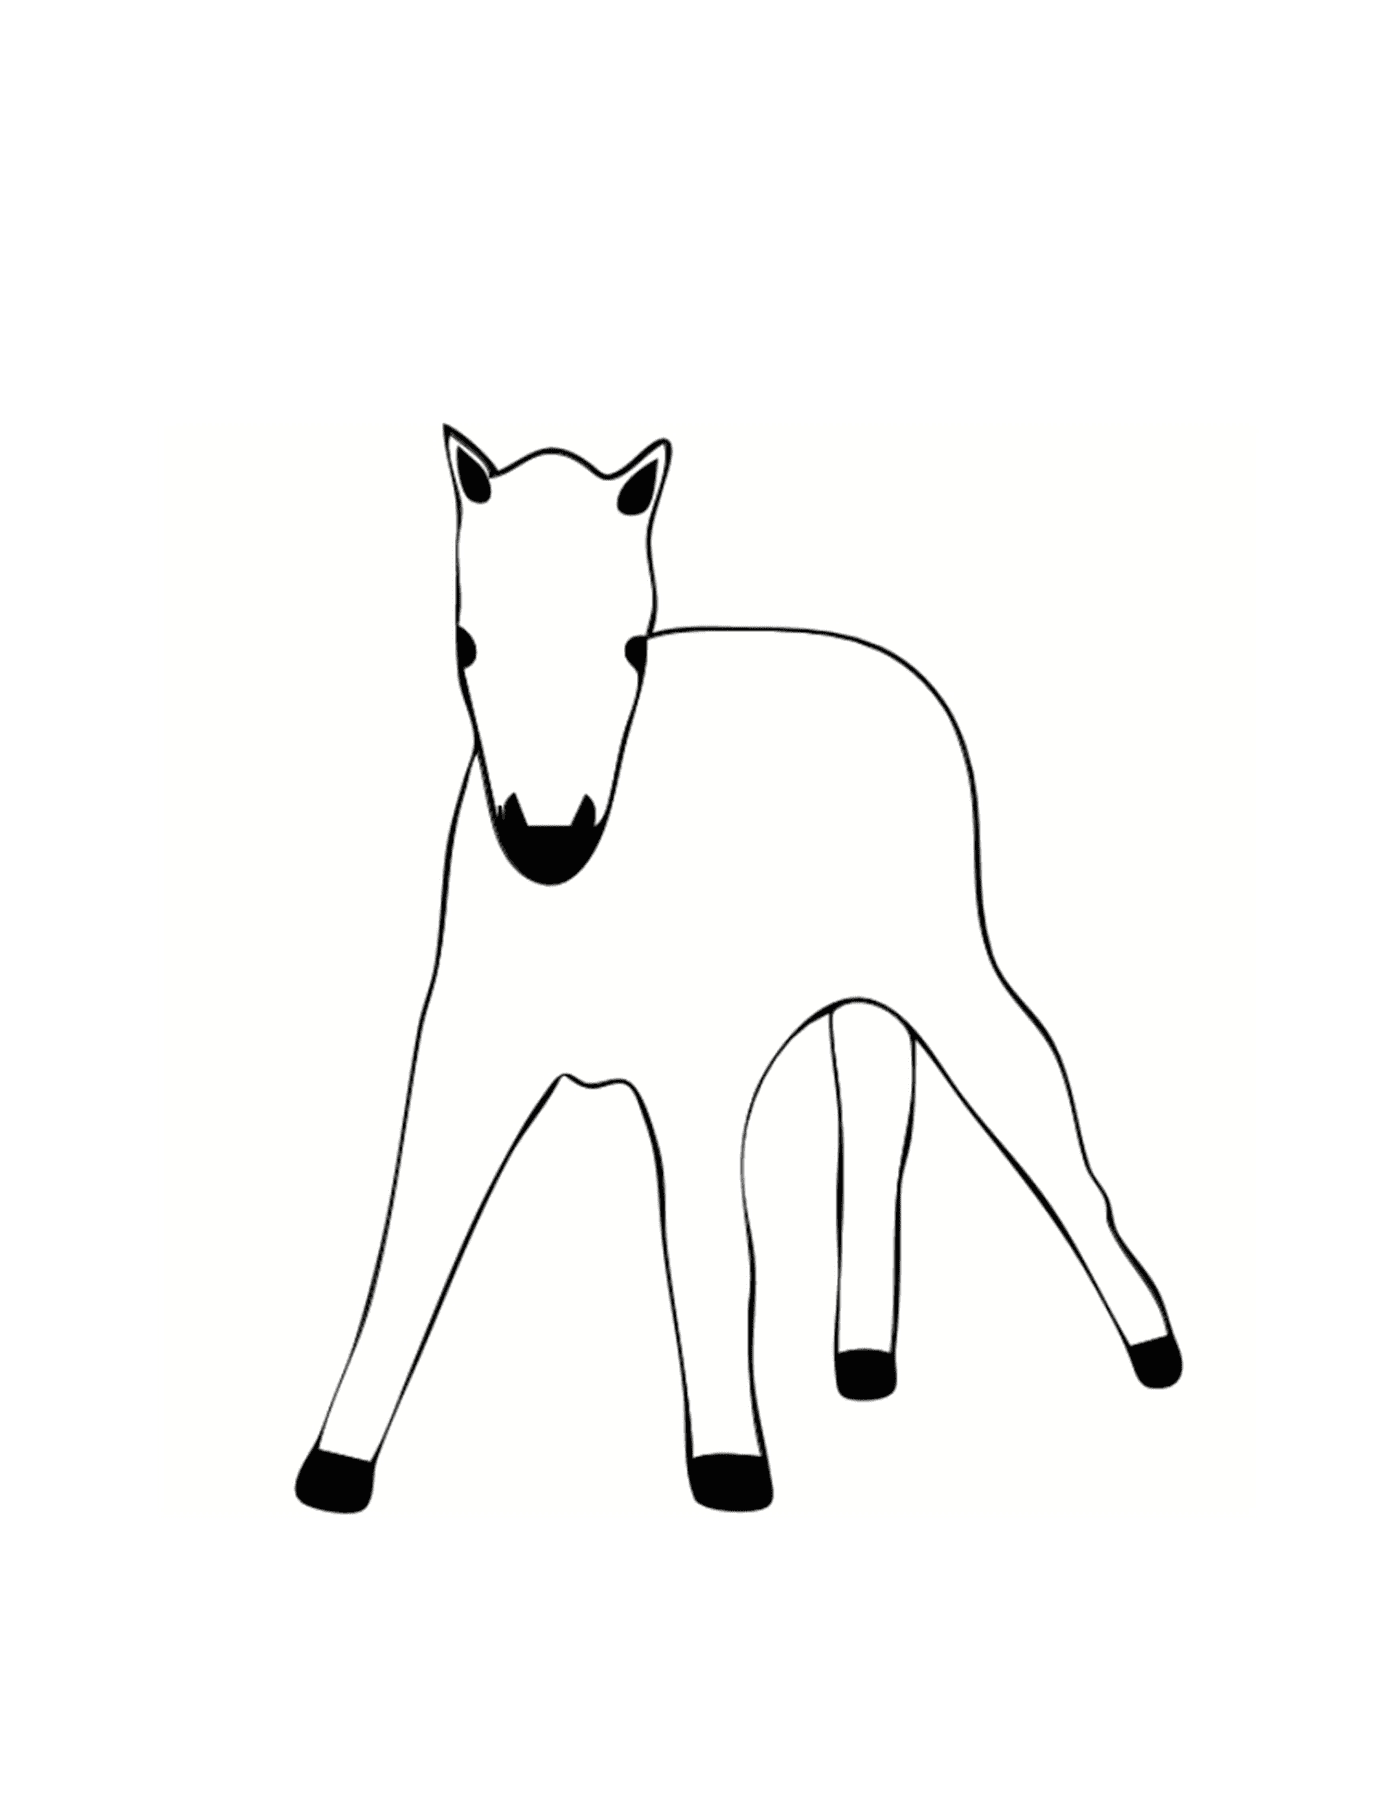  Poulain, giovane pony pieno di vita 